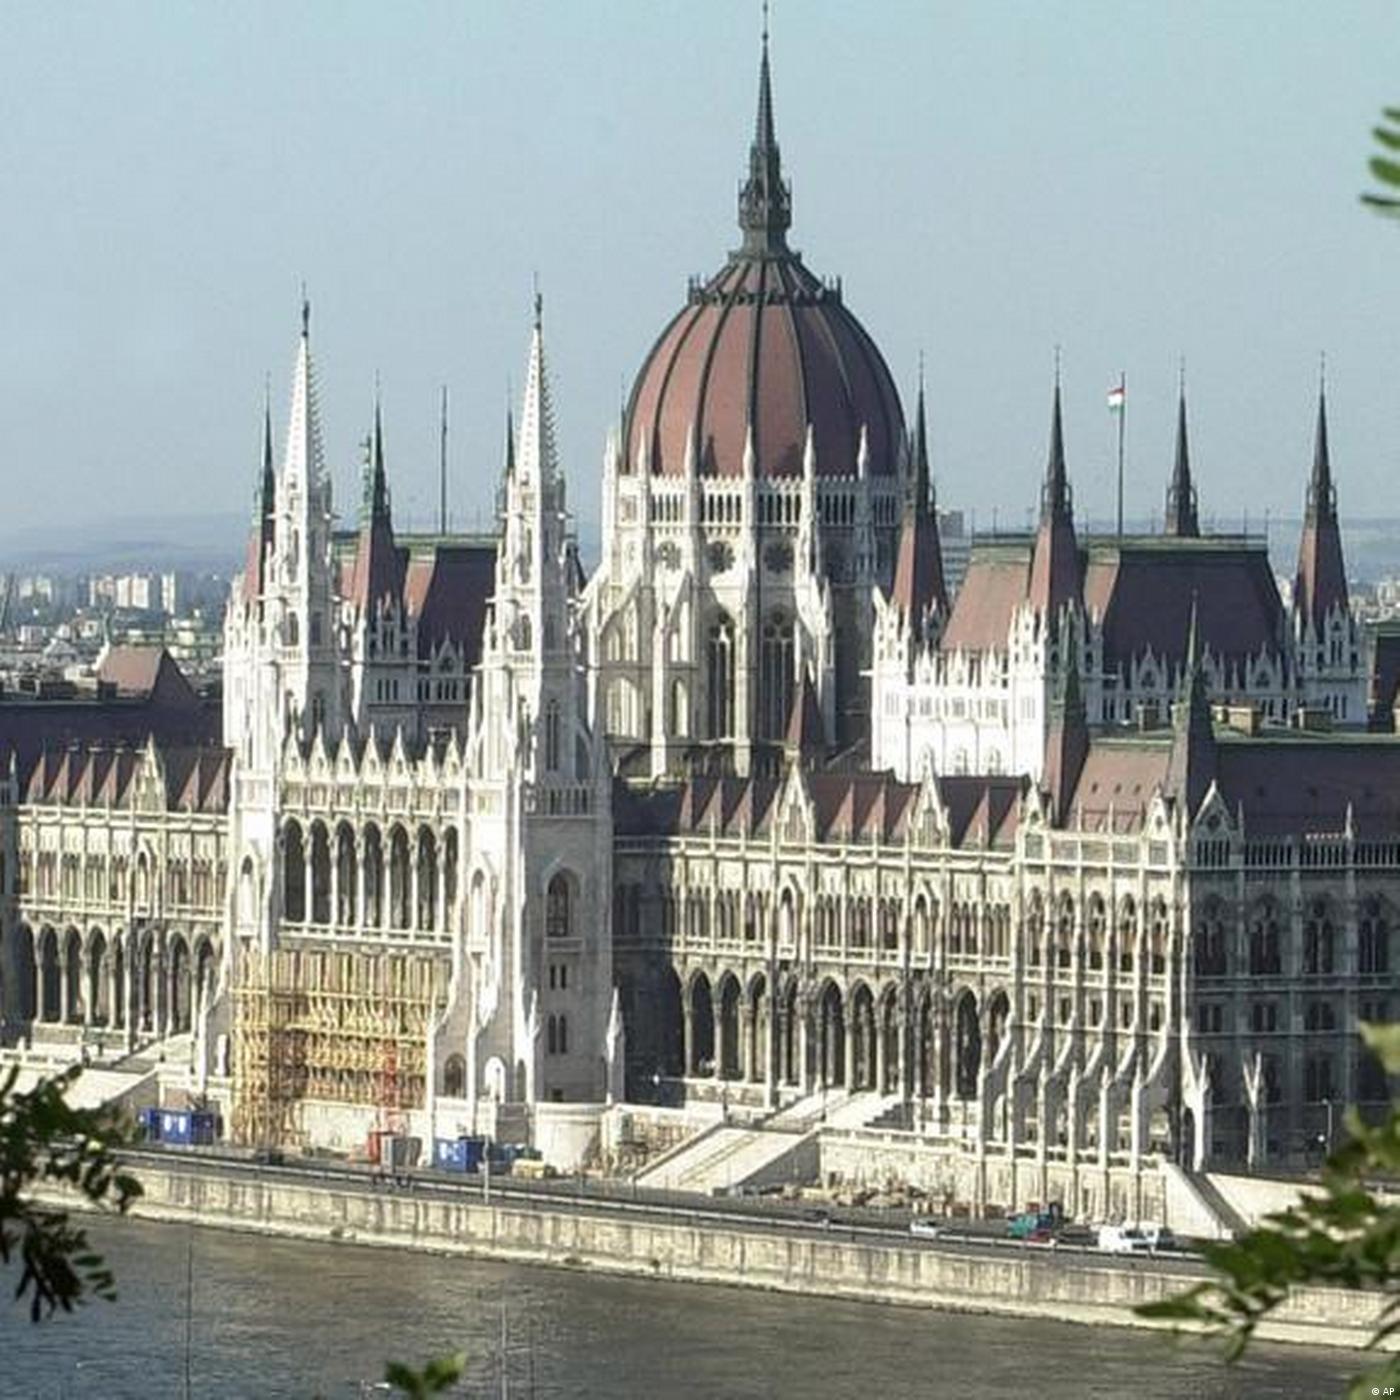 Hungary: A controversial wartime memorial